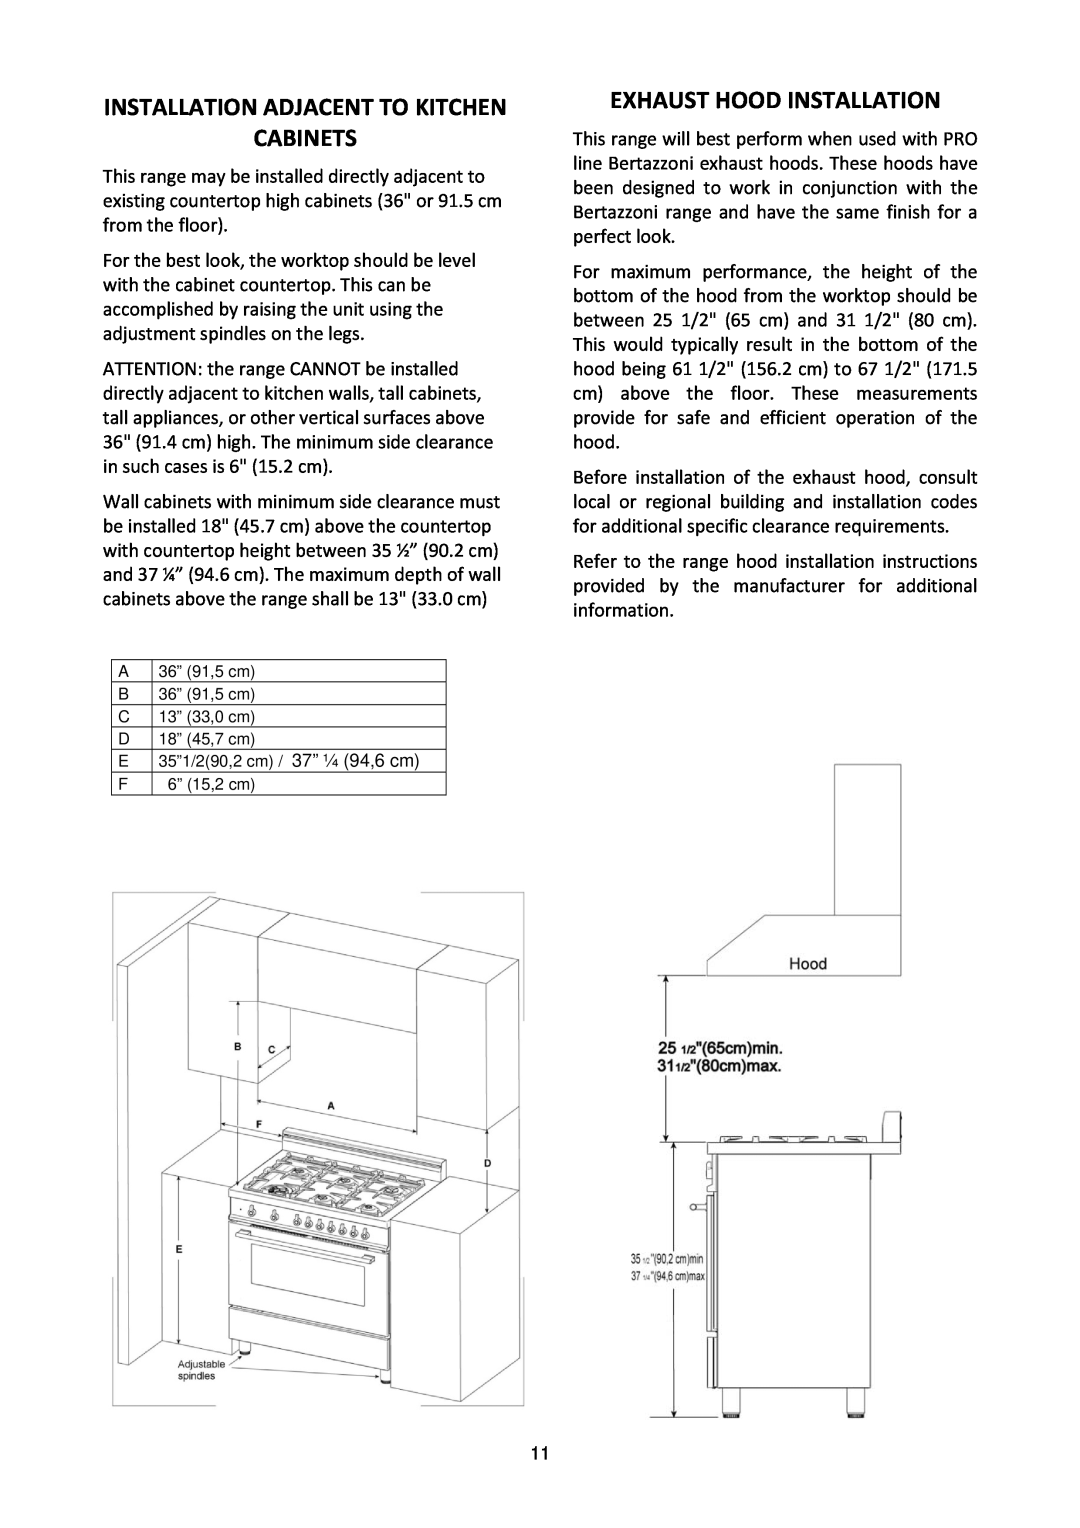 Bertazzoni MAS365GASXTLP, MAS365GASXELP manual Installation Adjacent To Kitchen Cabinets, Exhaust Hood Installation 